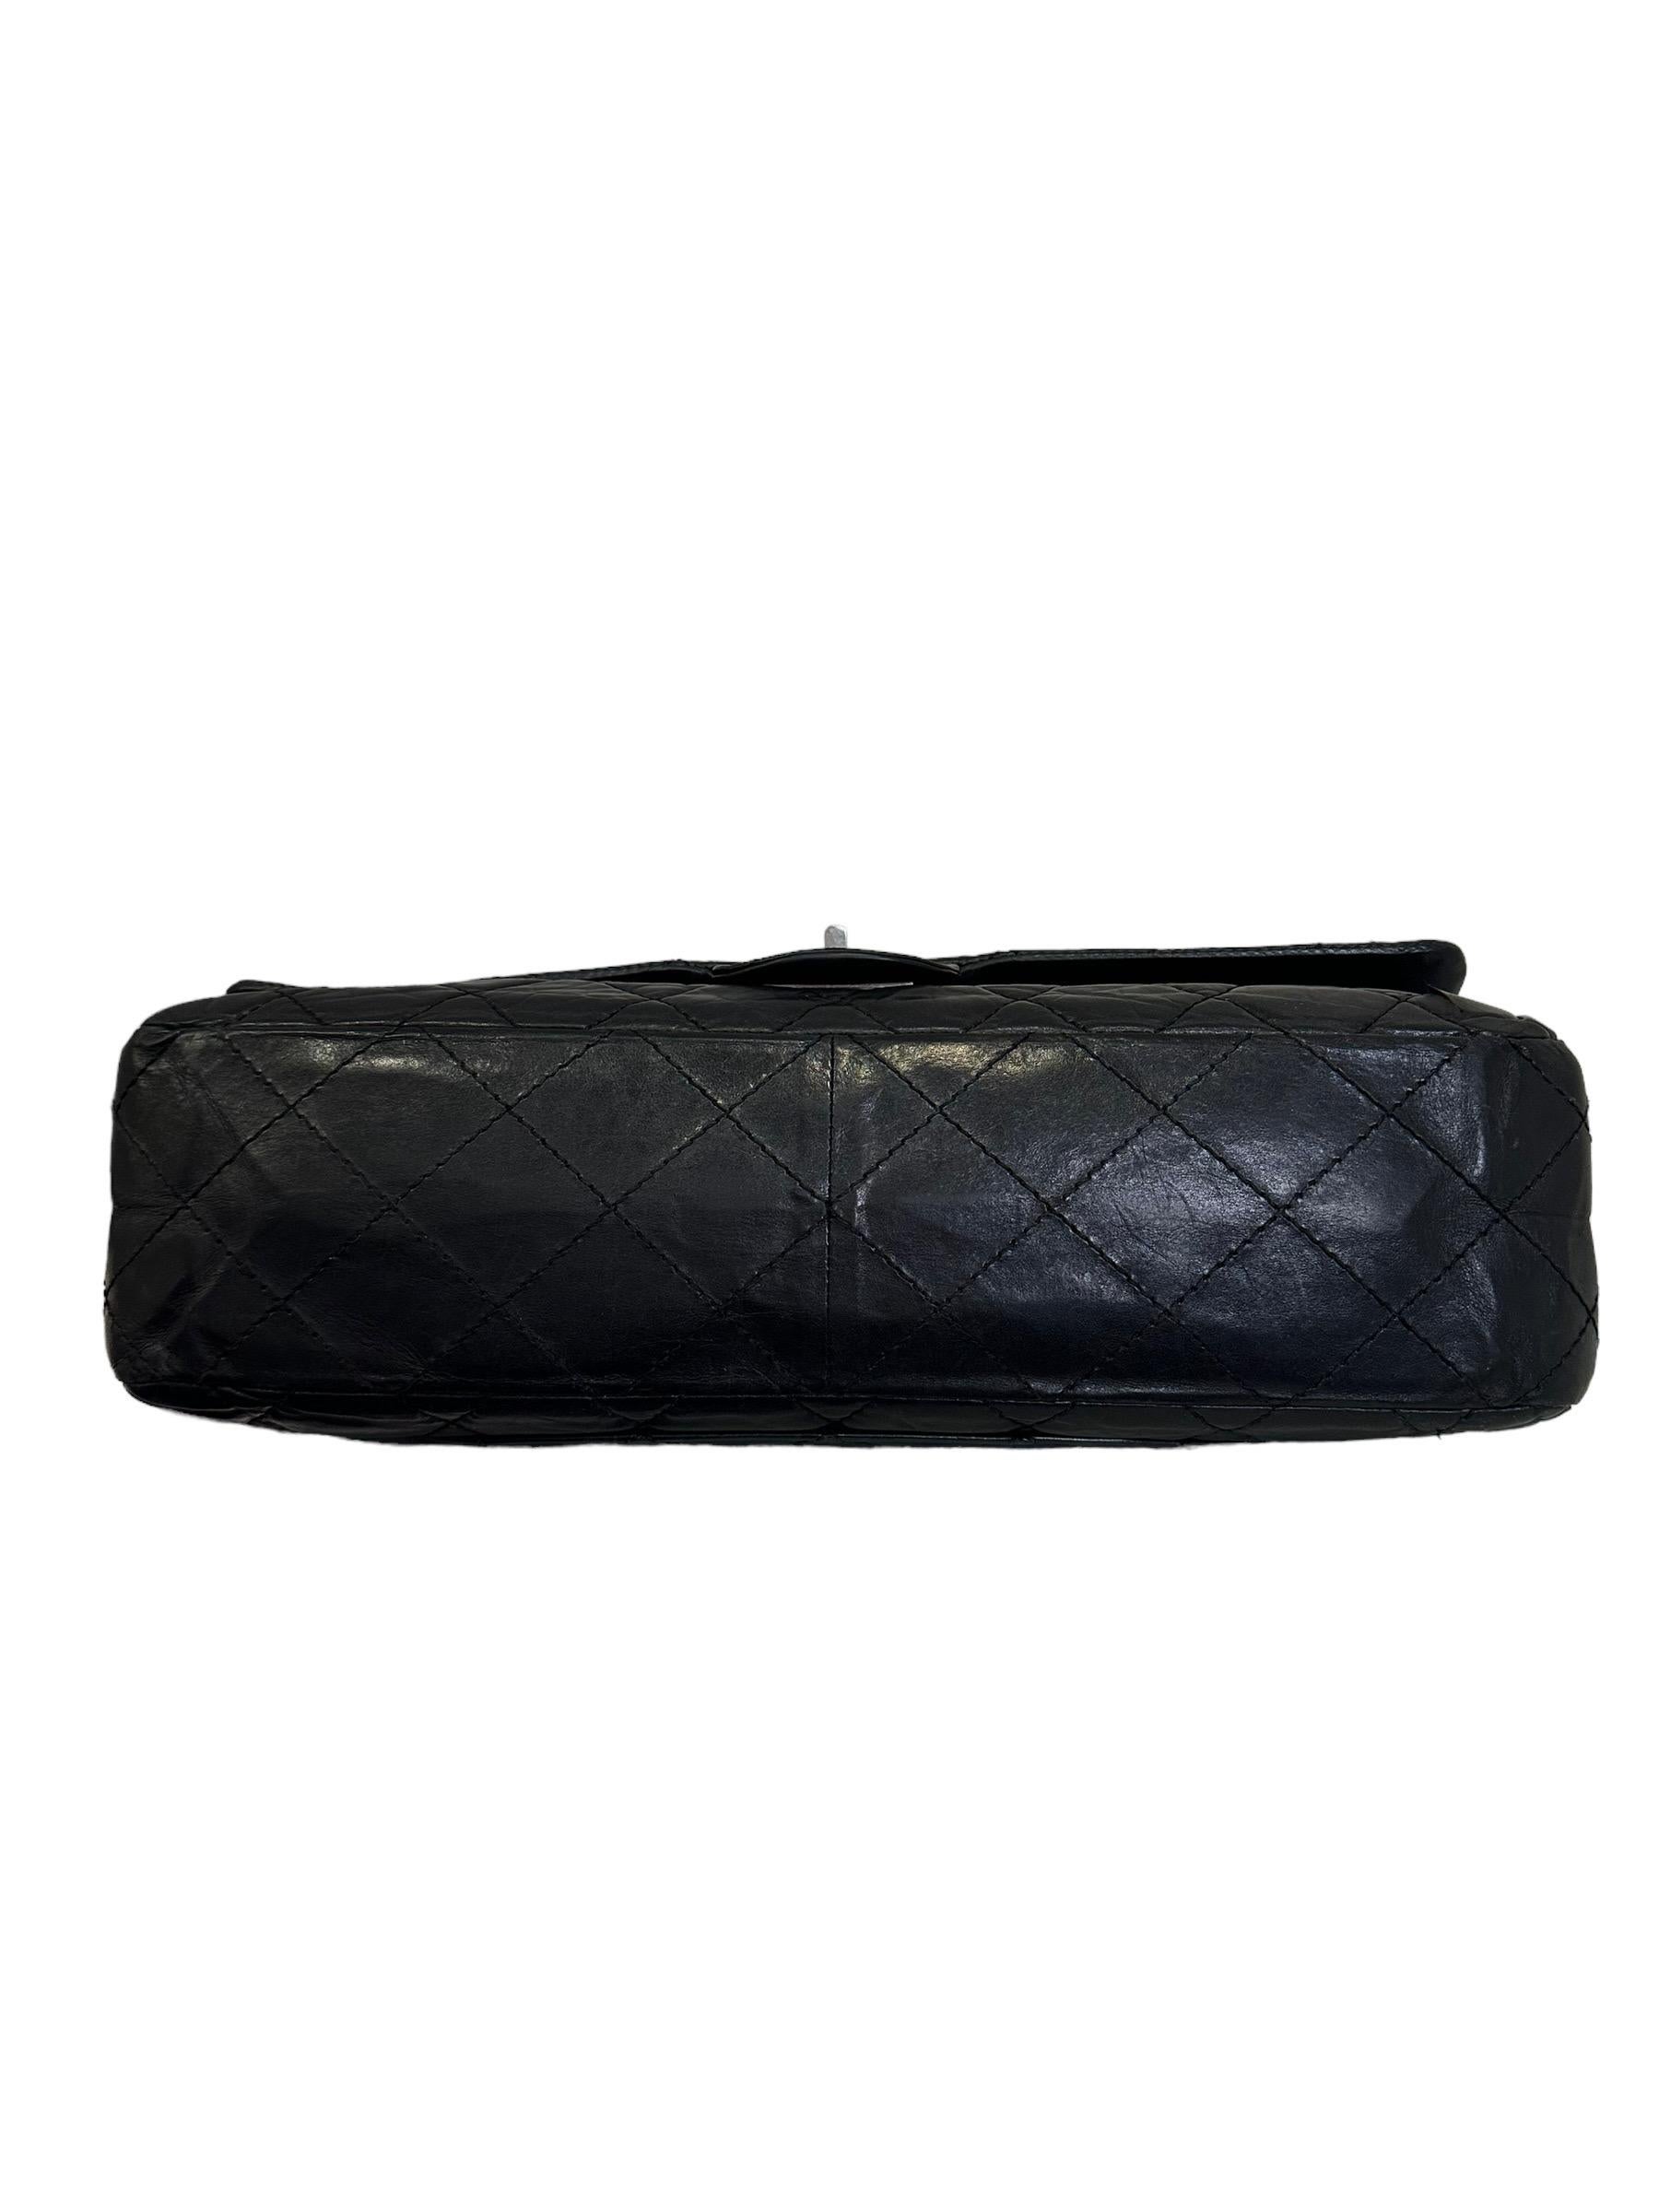 2008 Chanel Reissue Maxi Jumbo Blue Top Shoulder Bag For Sale 8